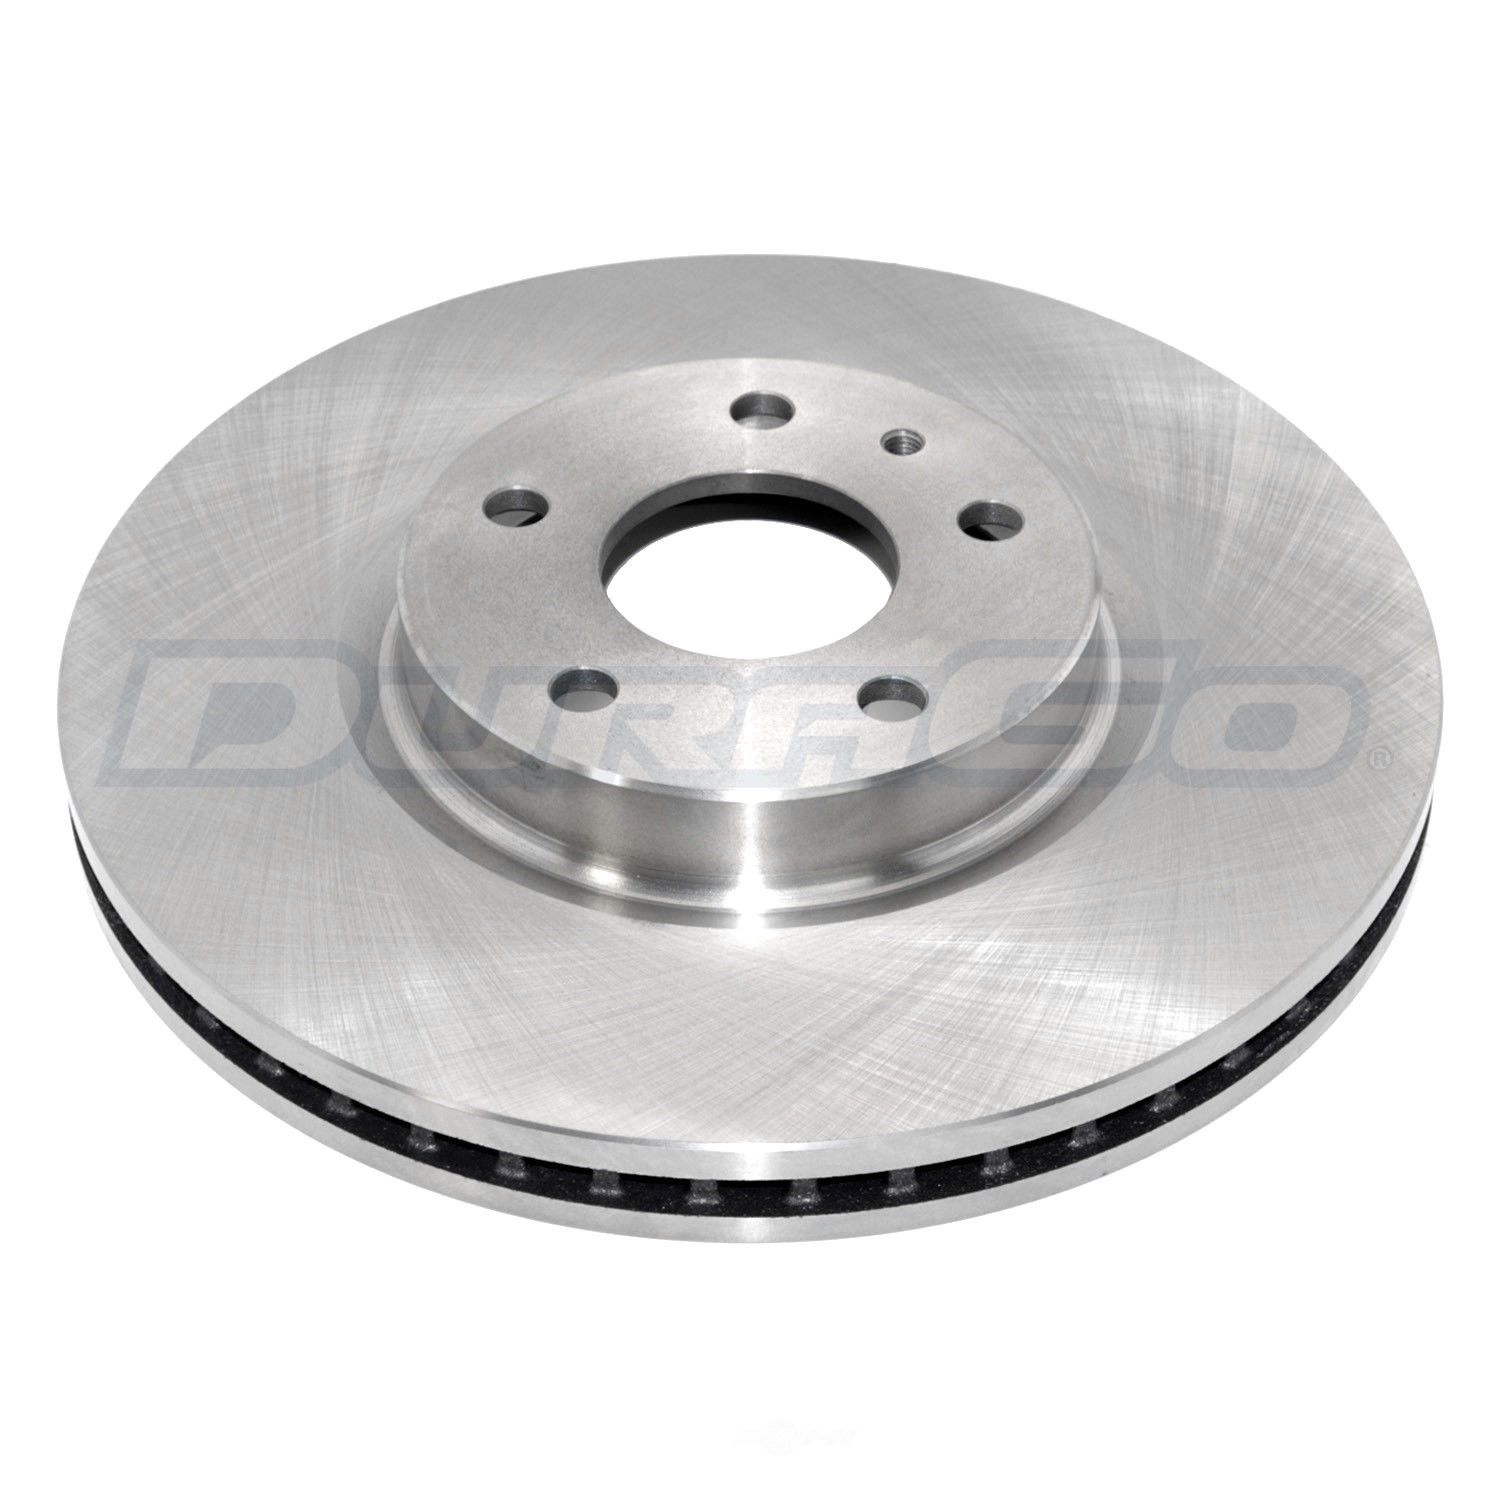 DURAGO - Disc Brake Rotor - D48 BR901162